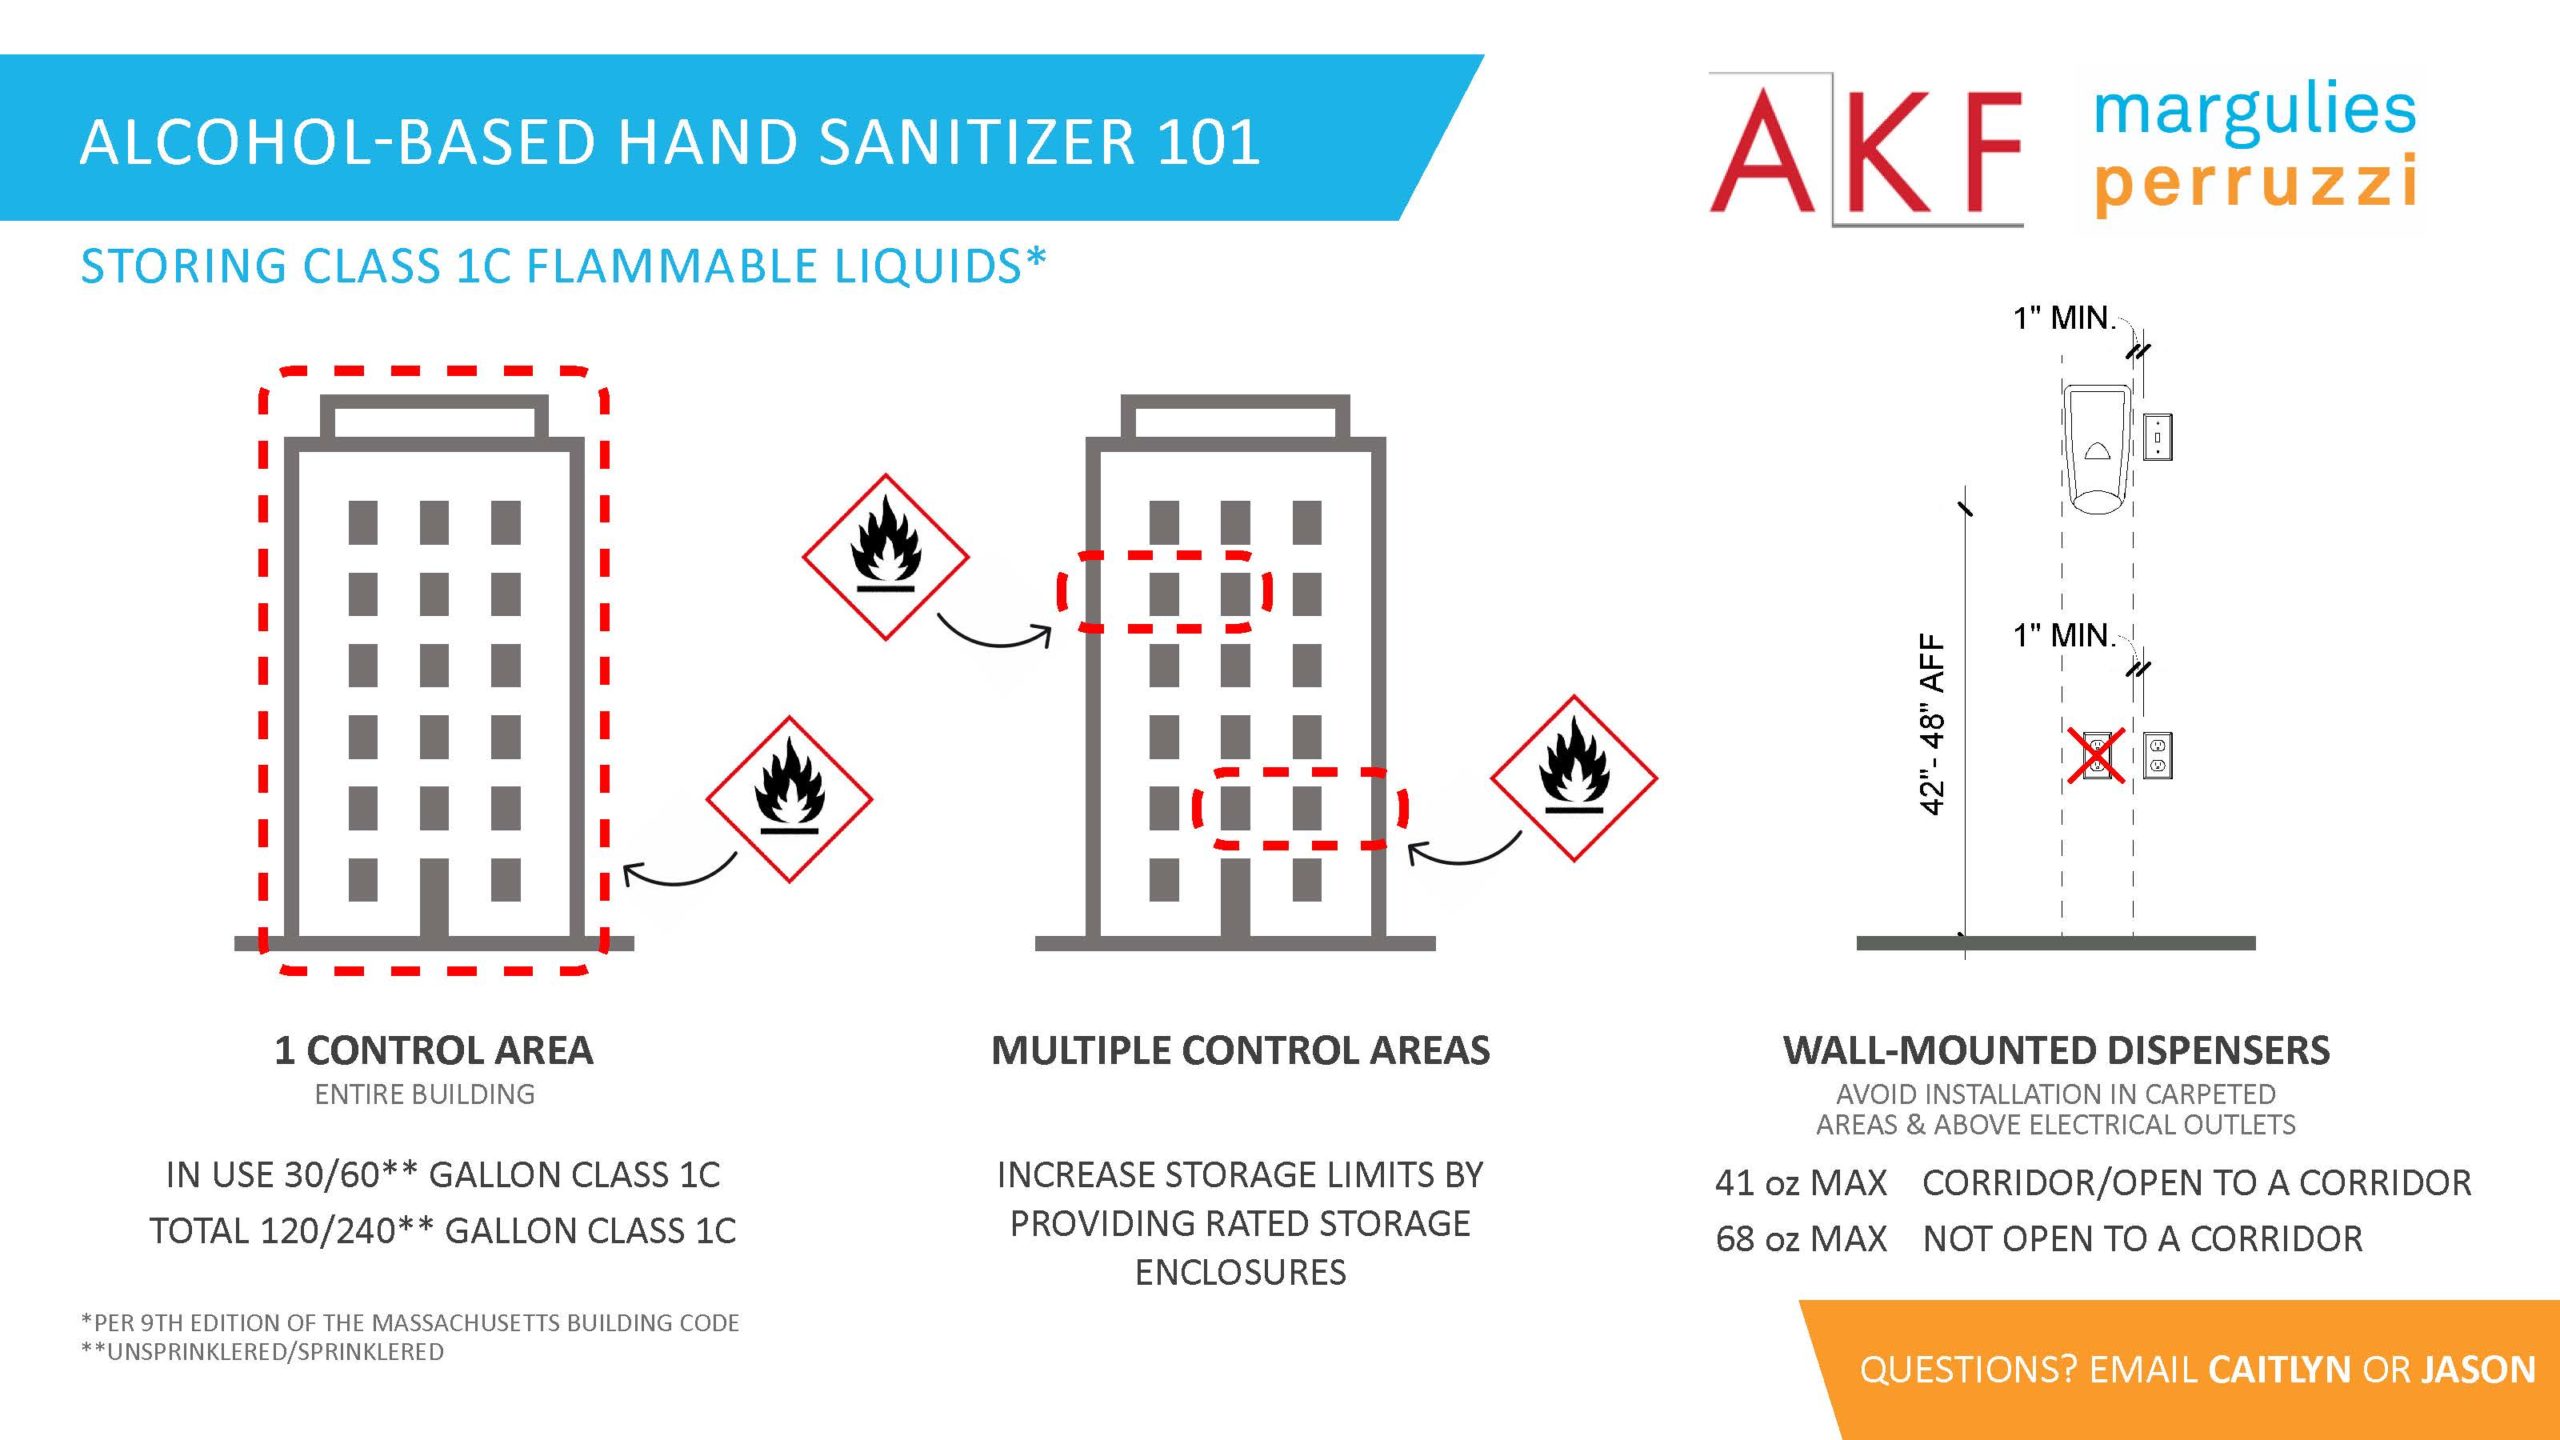 Alcohol-based hand sanitizer 101